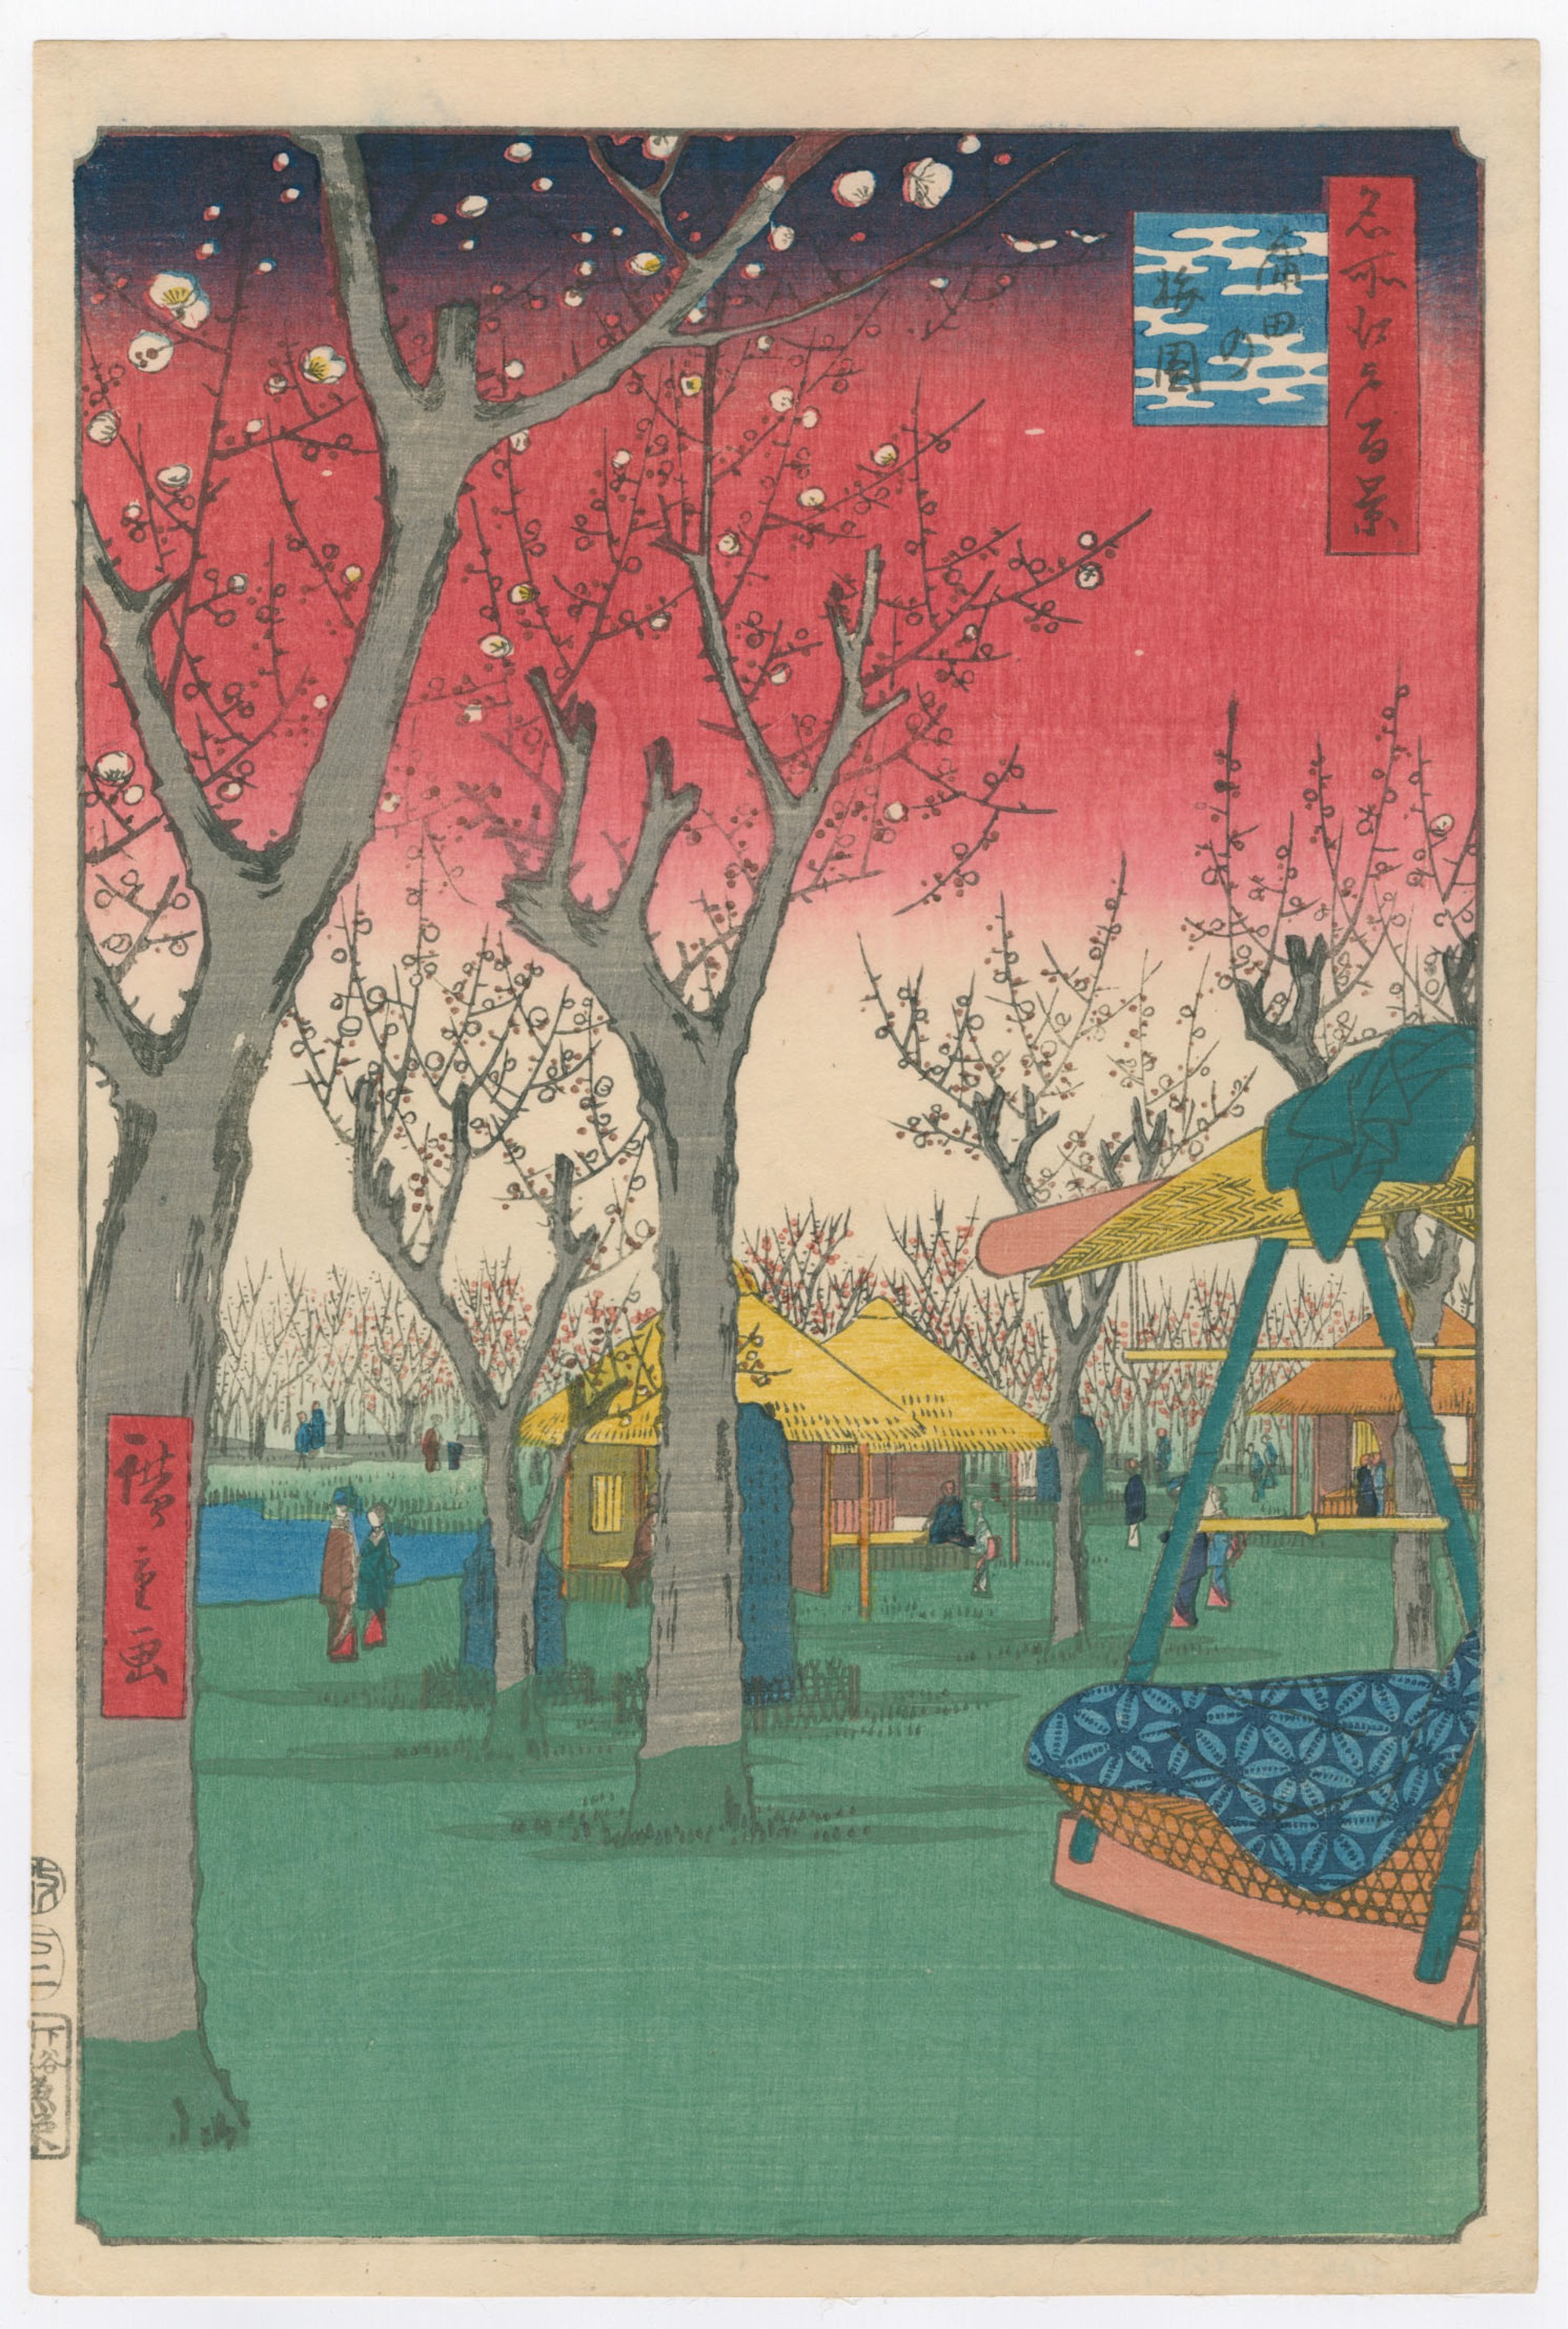 Plum Garden at Kamata 100 Views of Edo by Hiroshige